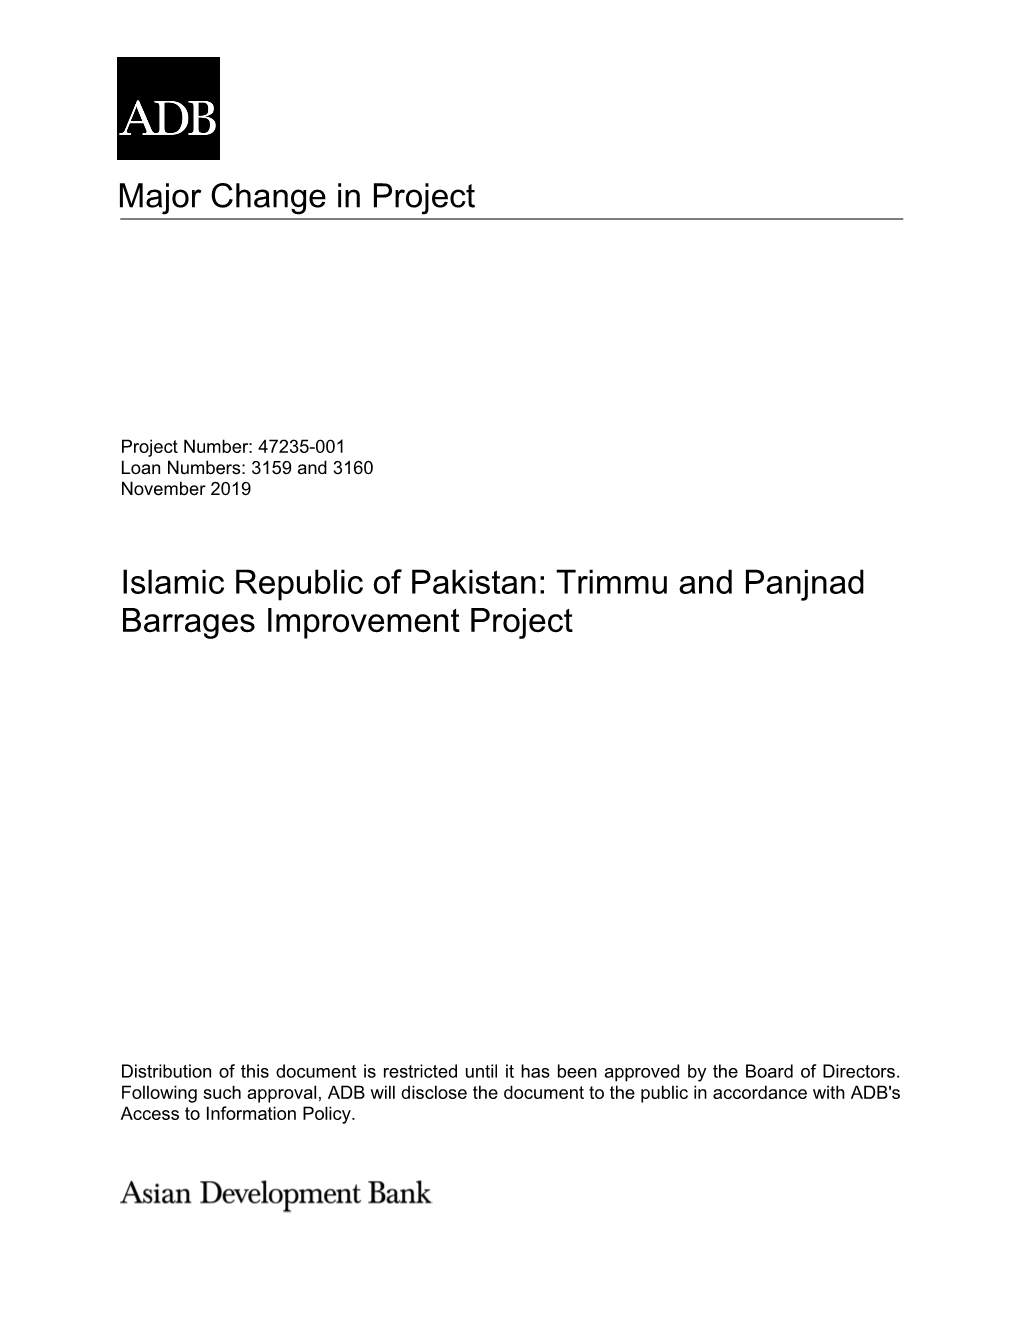 Trimmu and Panjnad Barrages Improvement Project: Major